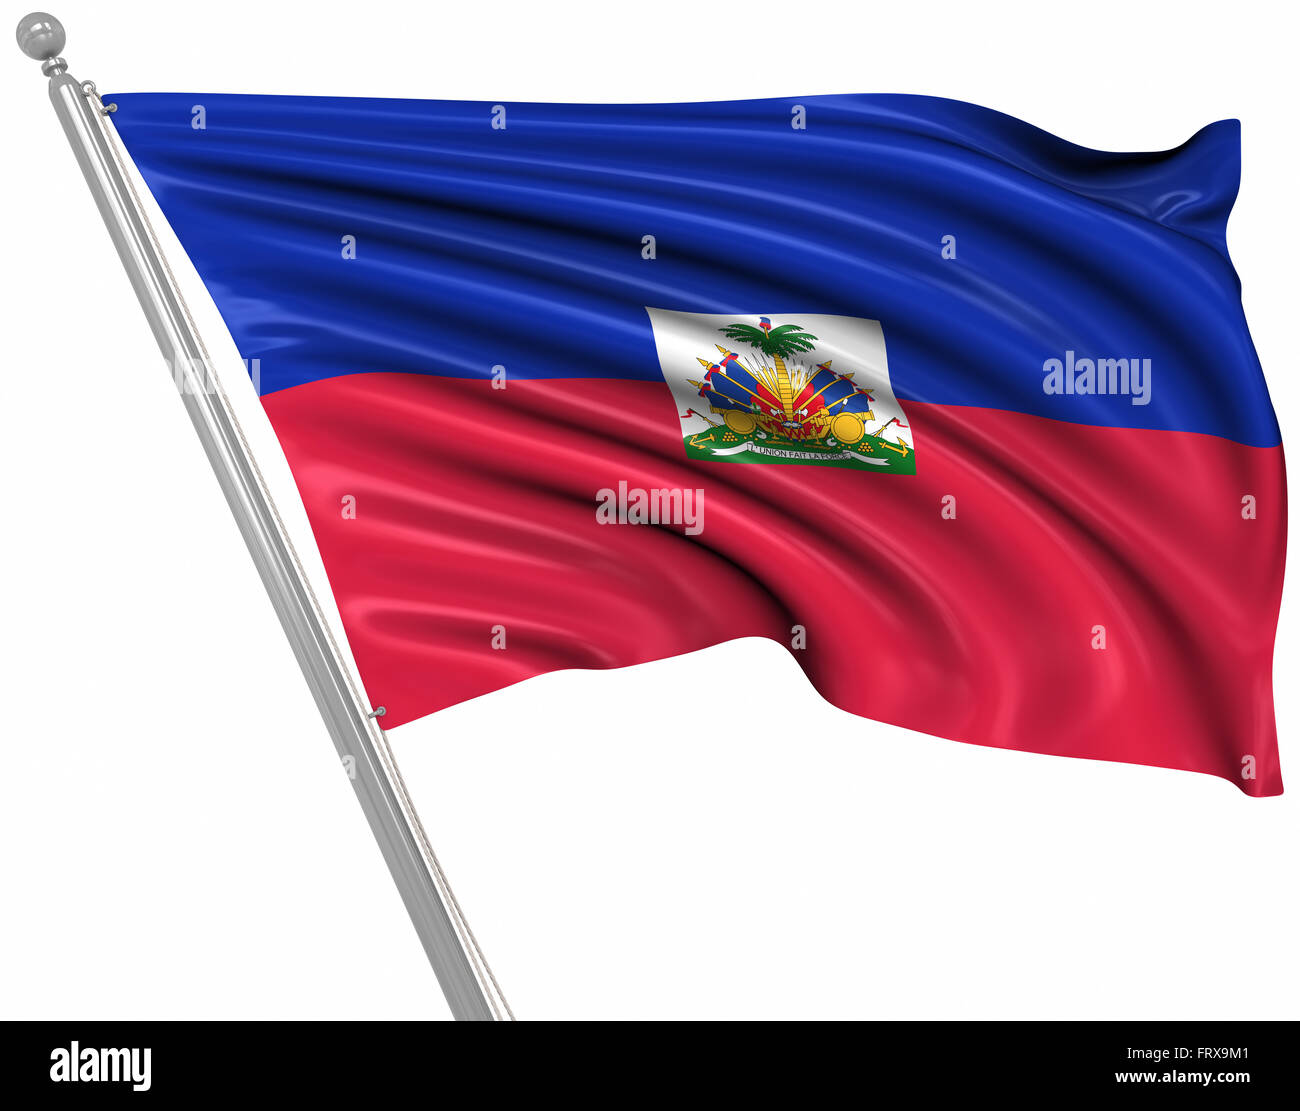 Haiti flag map, three dimensional render, isolated on white Stock Photo -  Alamy